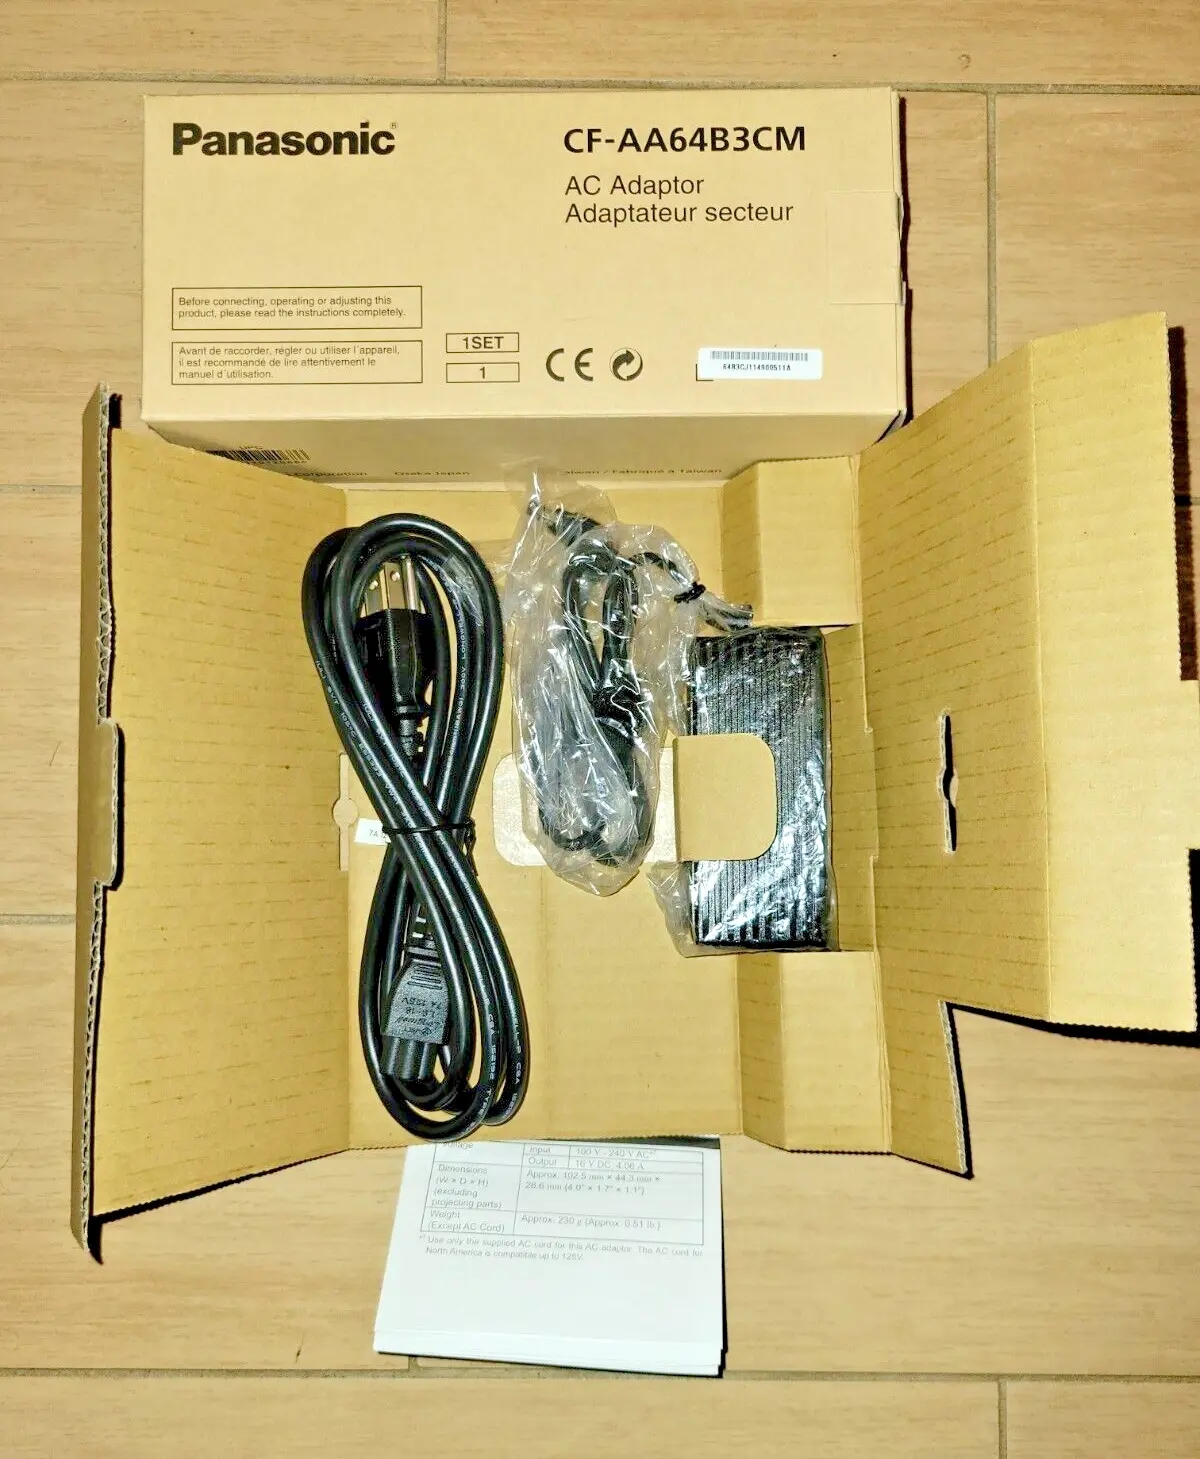 *Brand NEW*Original Panasonic CF-AA64B3CM 16V 4.06A AC/DC Adaptor Charger Power Supply